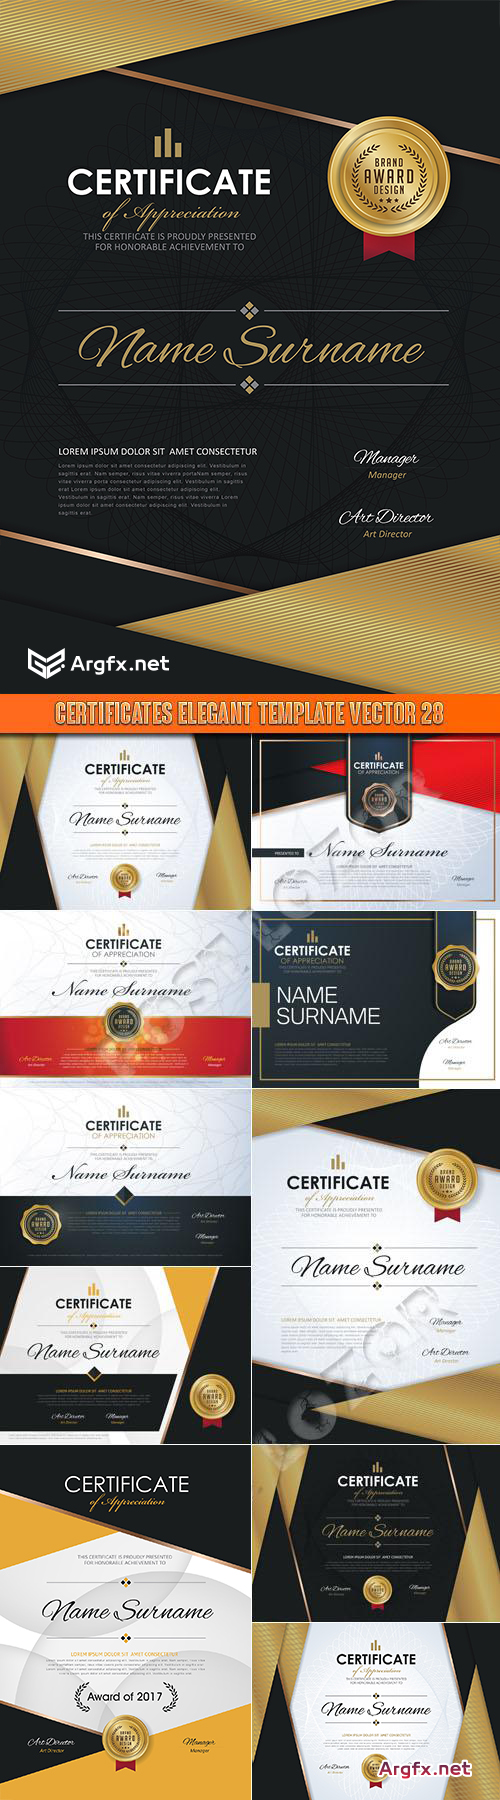 Certificates elegant template vector 28